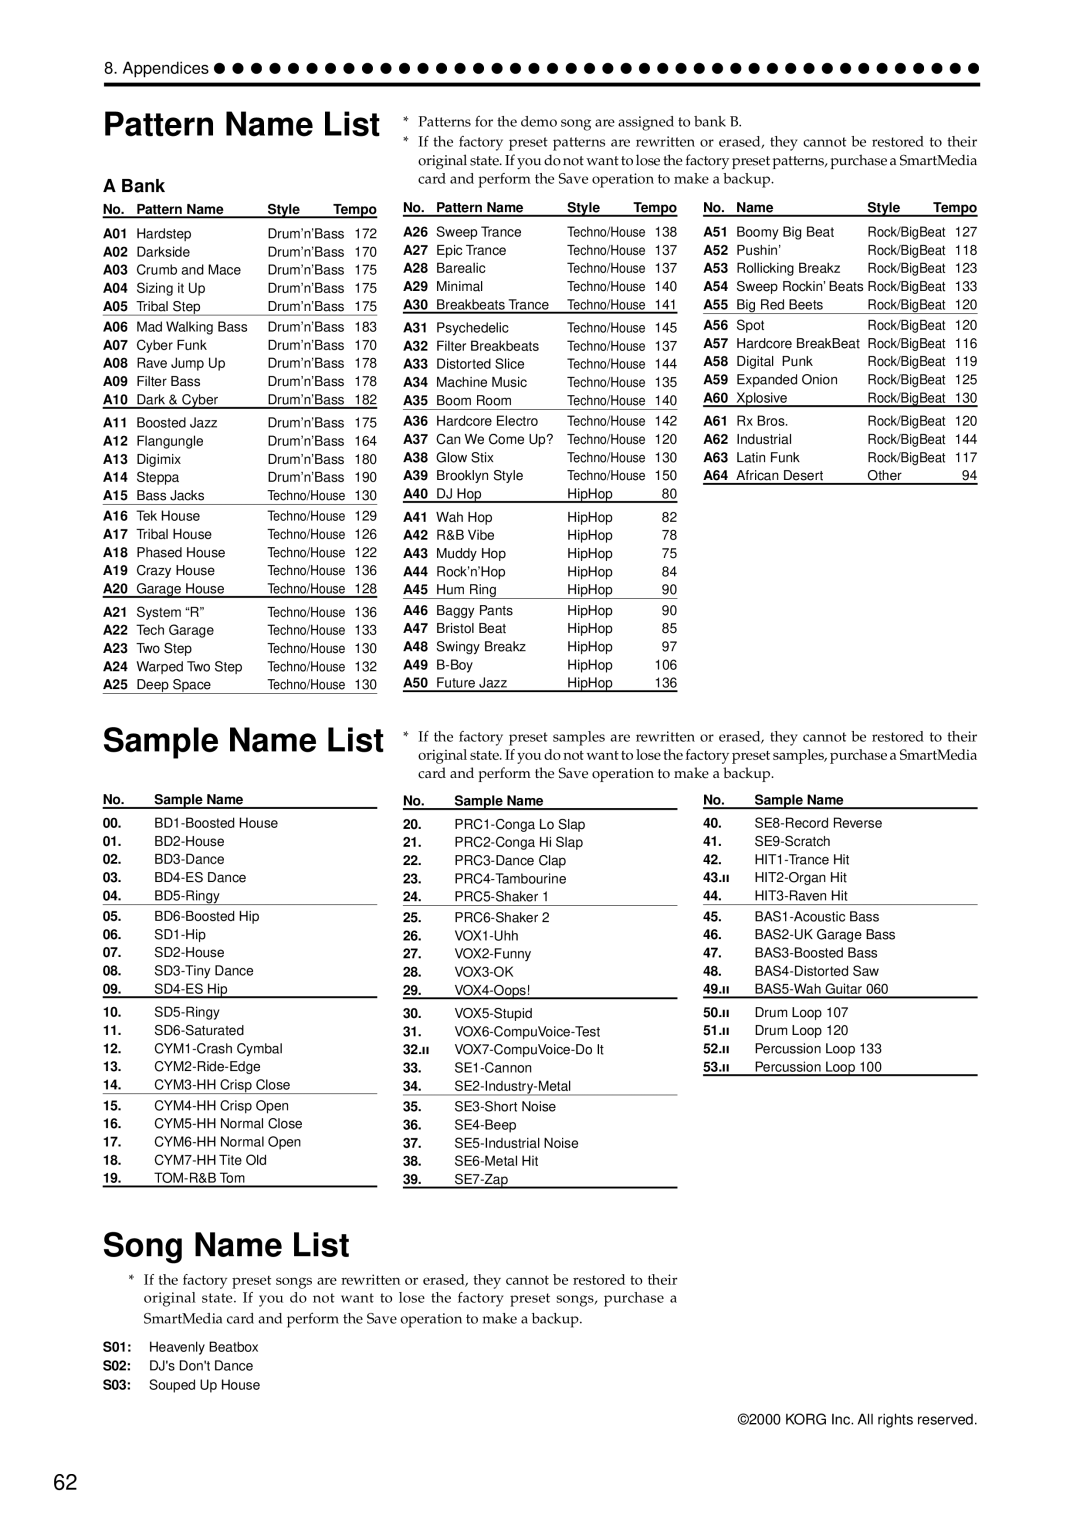 Korg ES-1 manual Pattern Name List, Sample Name List, Song Name List, Bank, Korg Inc. All rights reserved 